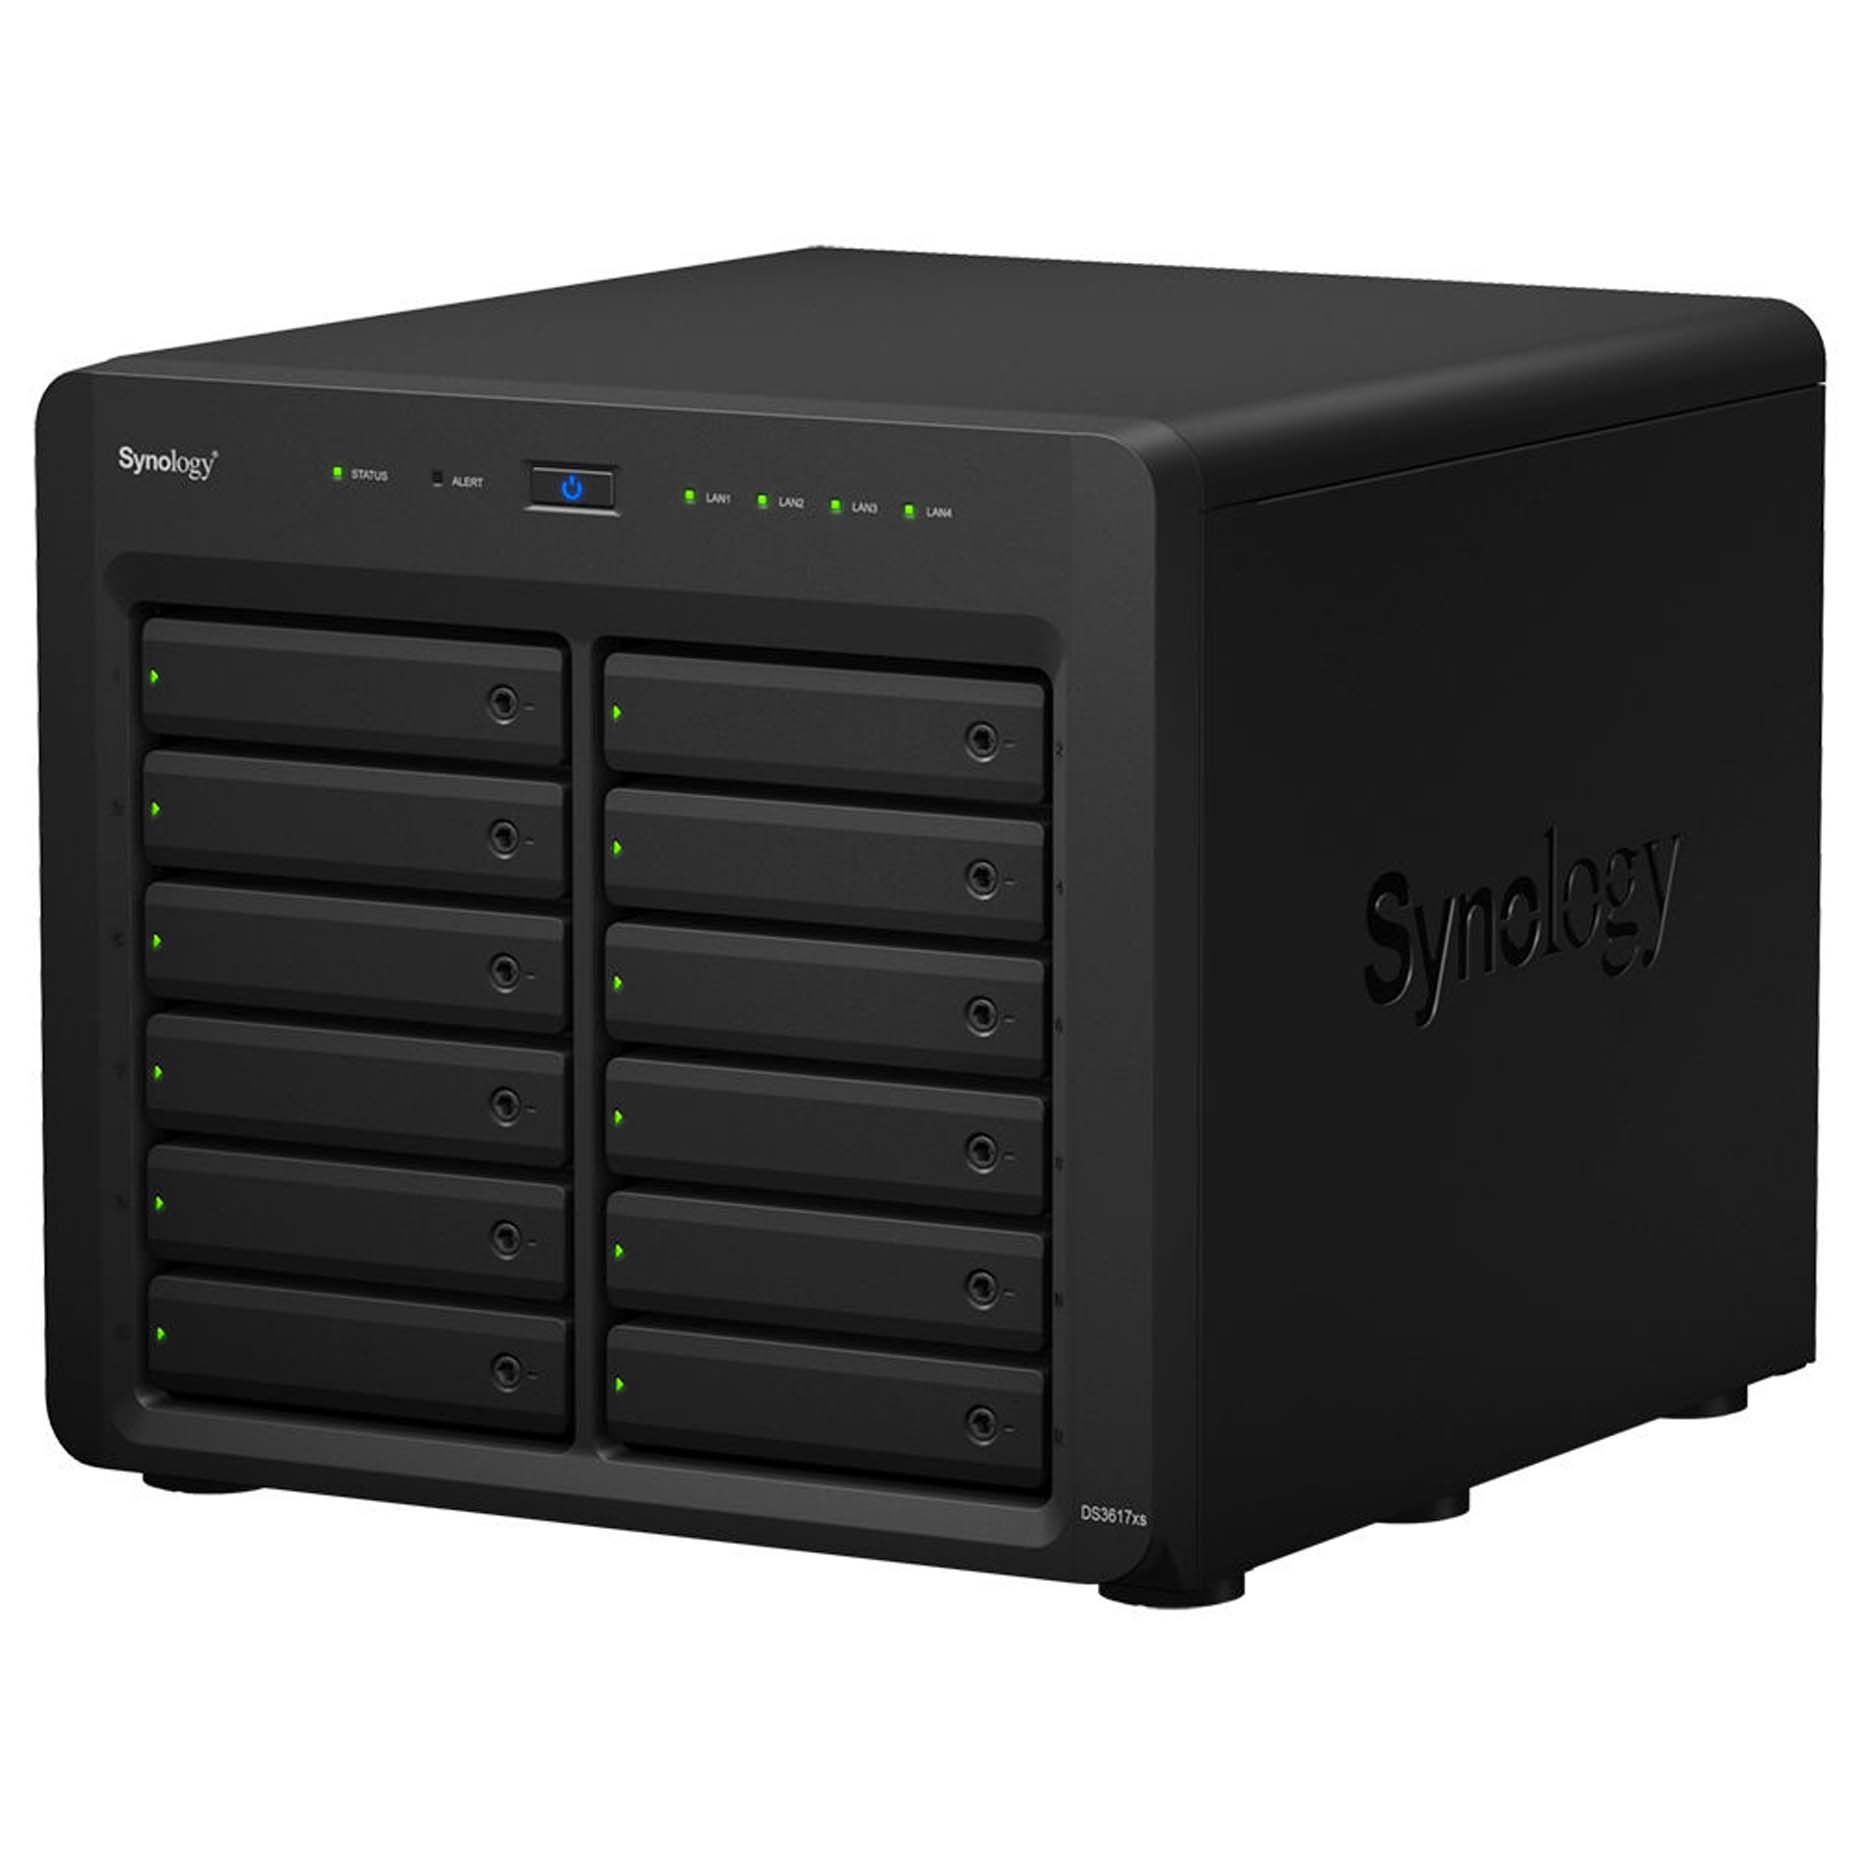 Harga Jual Synology DiskStation DS3617xs 12 Bay NAS Storage